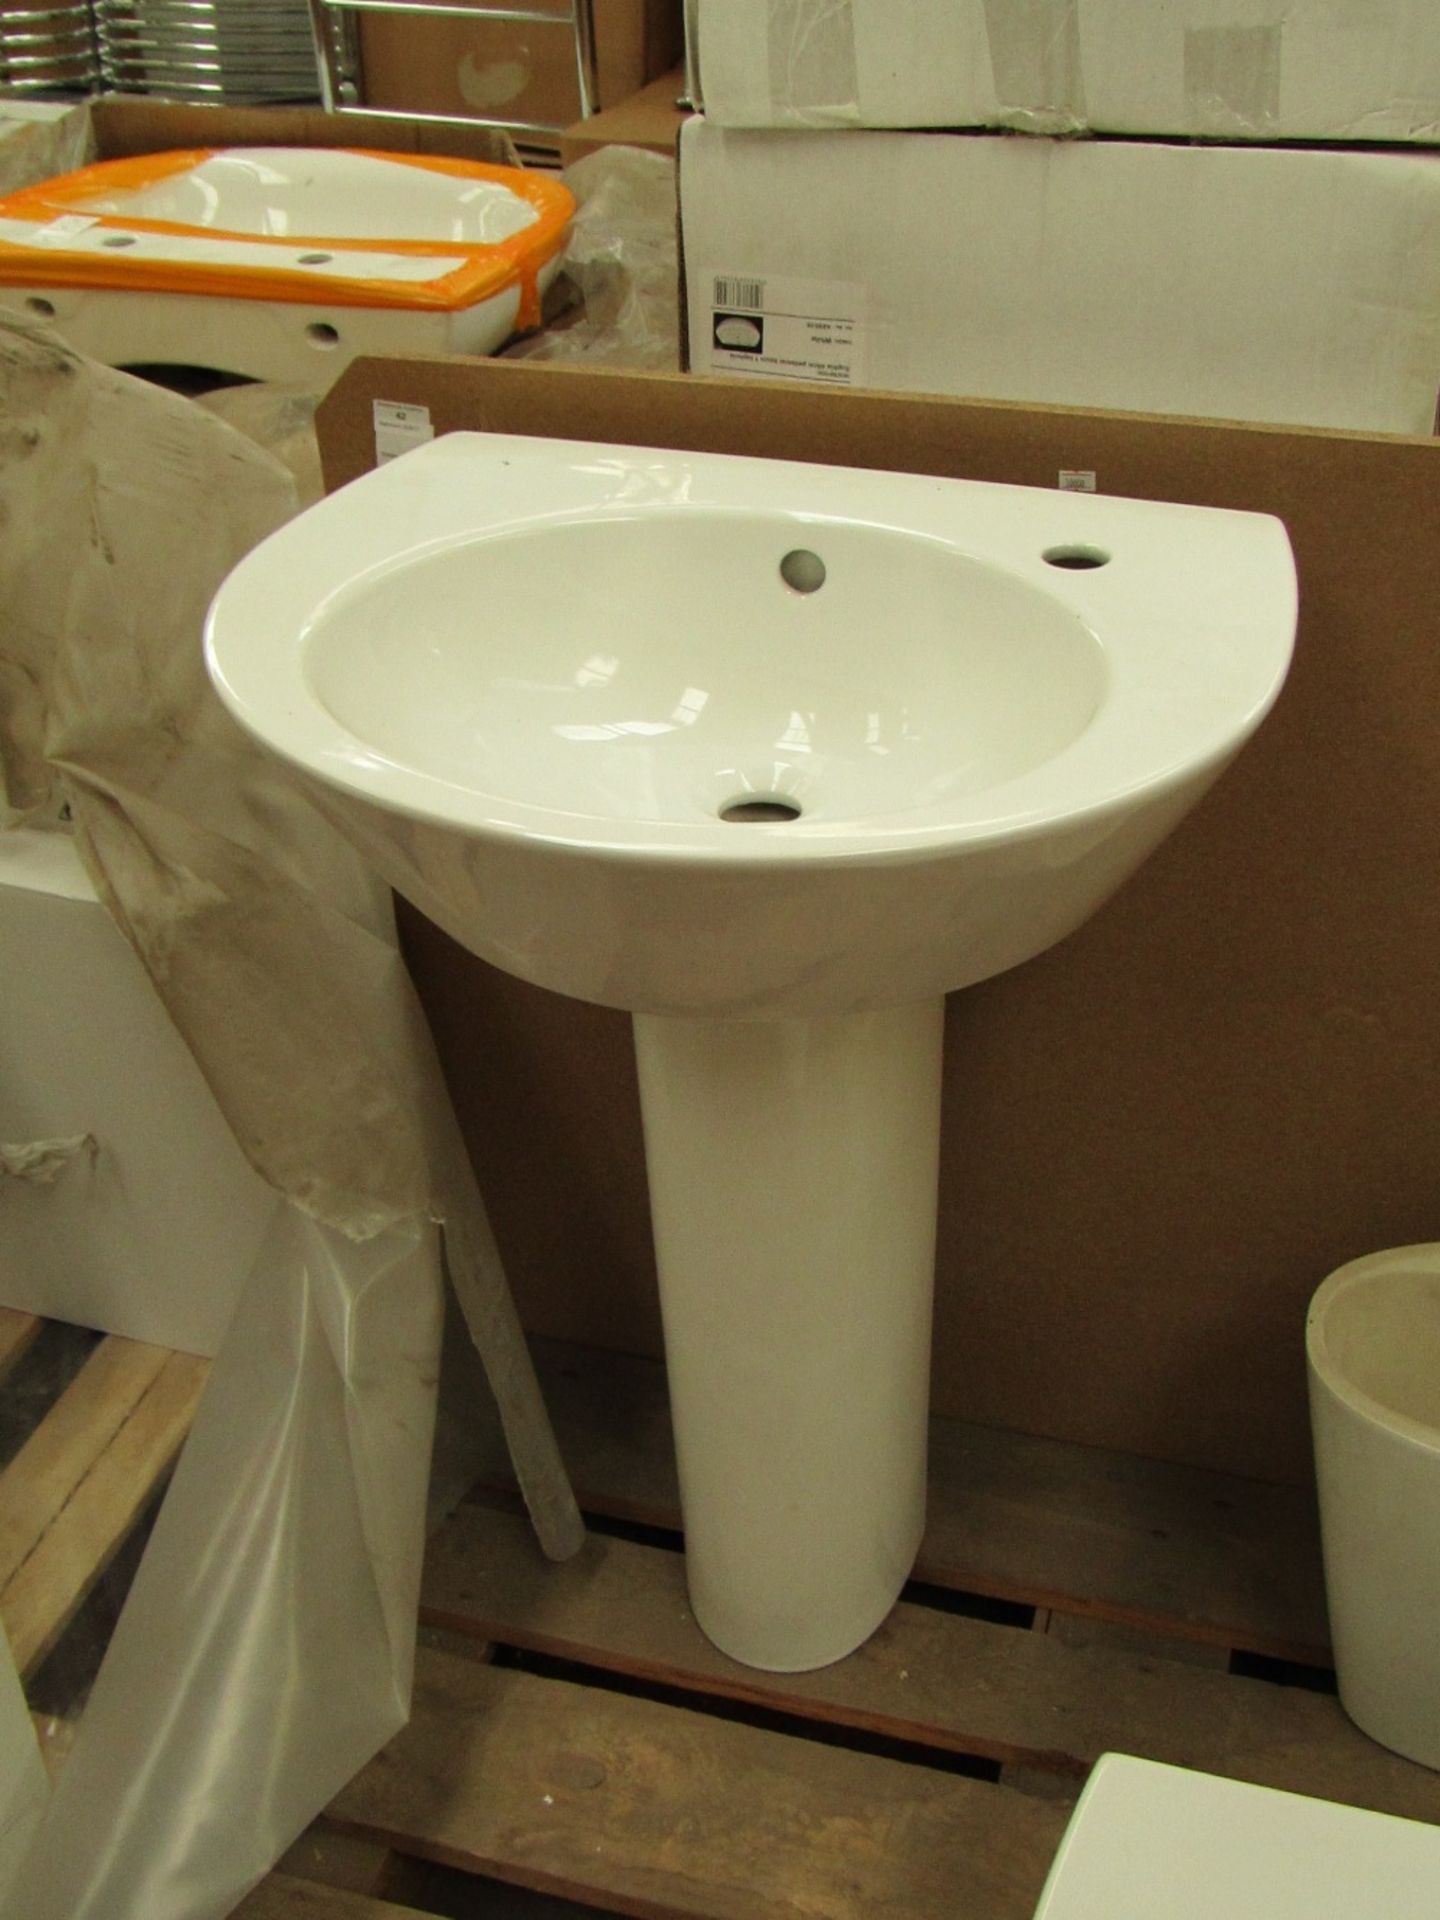 Bathroom Sink Set, Includes: - Ancona 550mm 1TH Basin - Ancona Full Pedestal Both New & boxed.